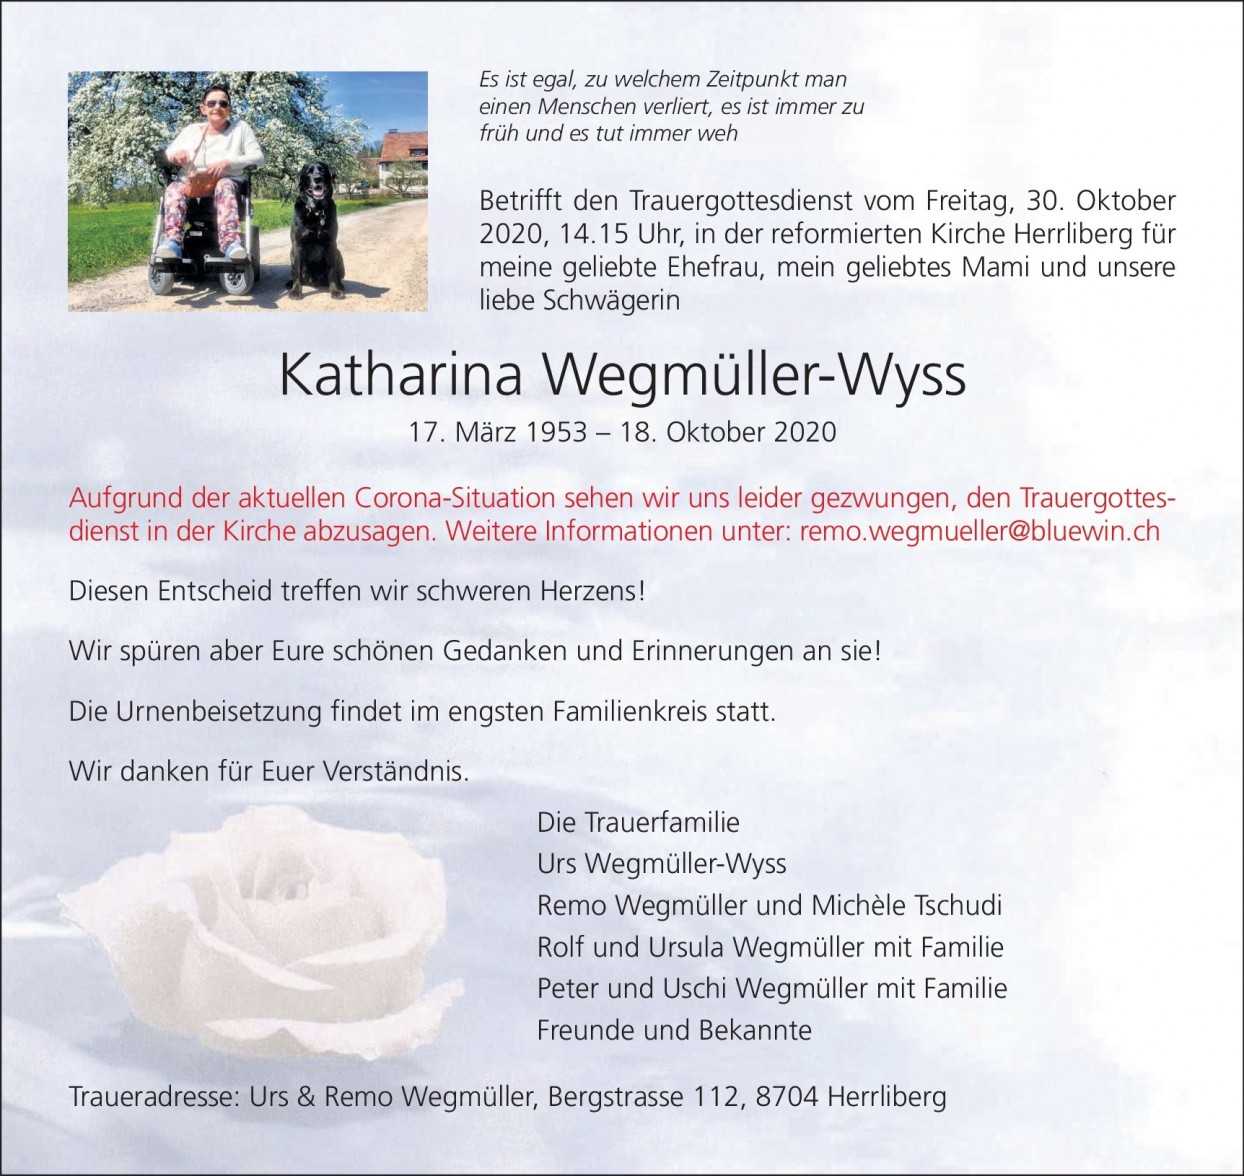 Katharina Wegmüller-Wyss